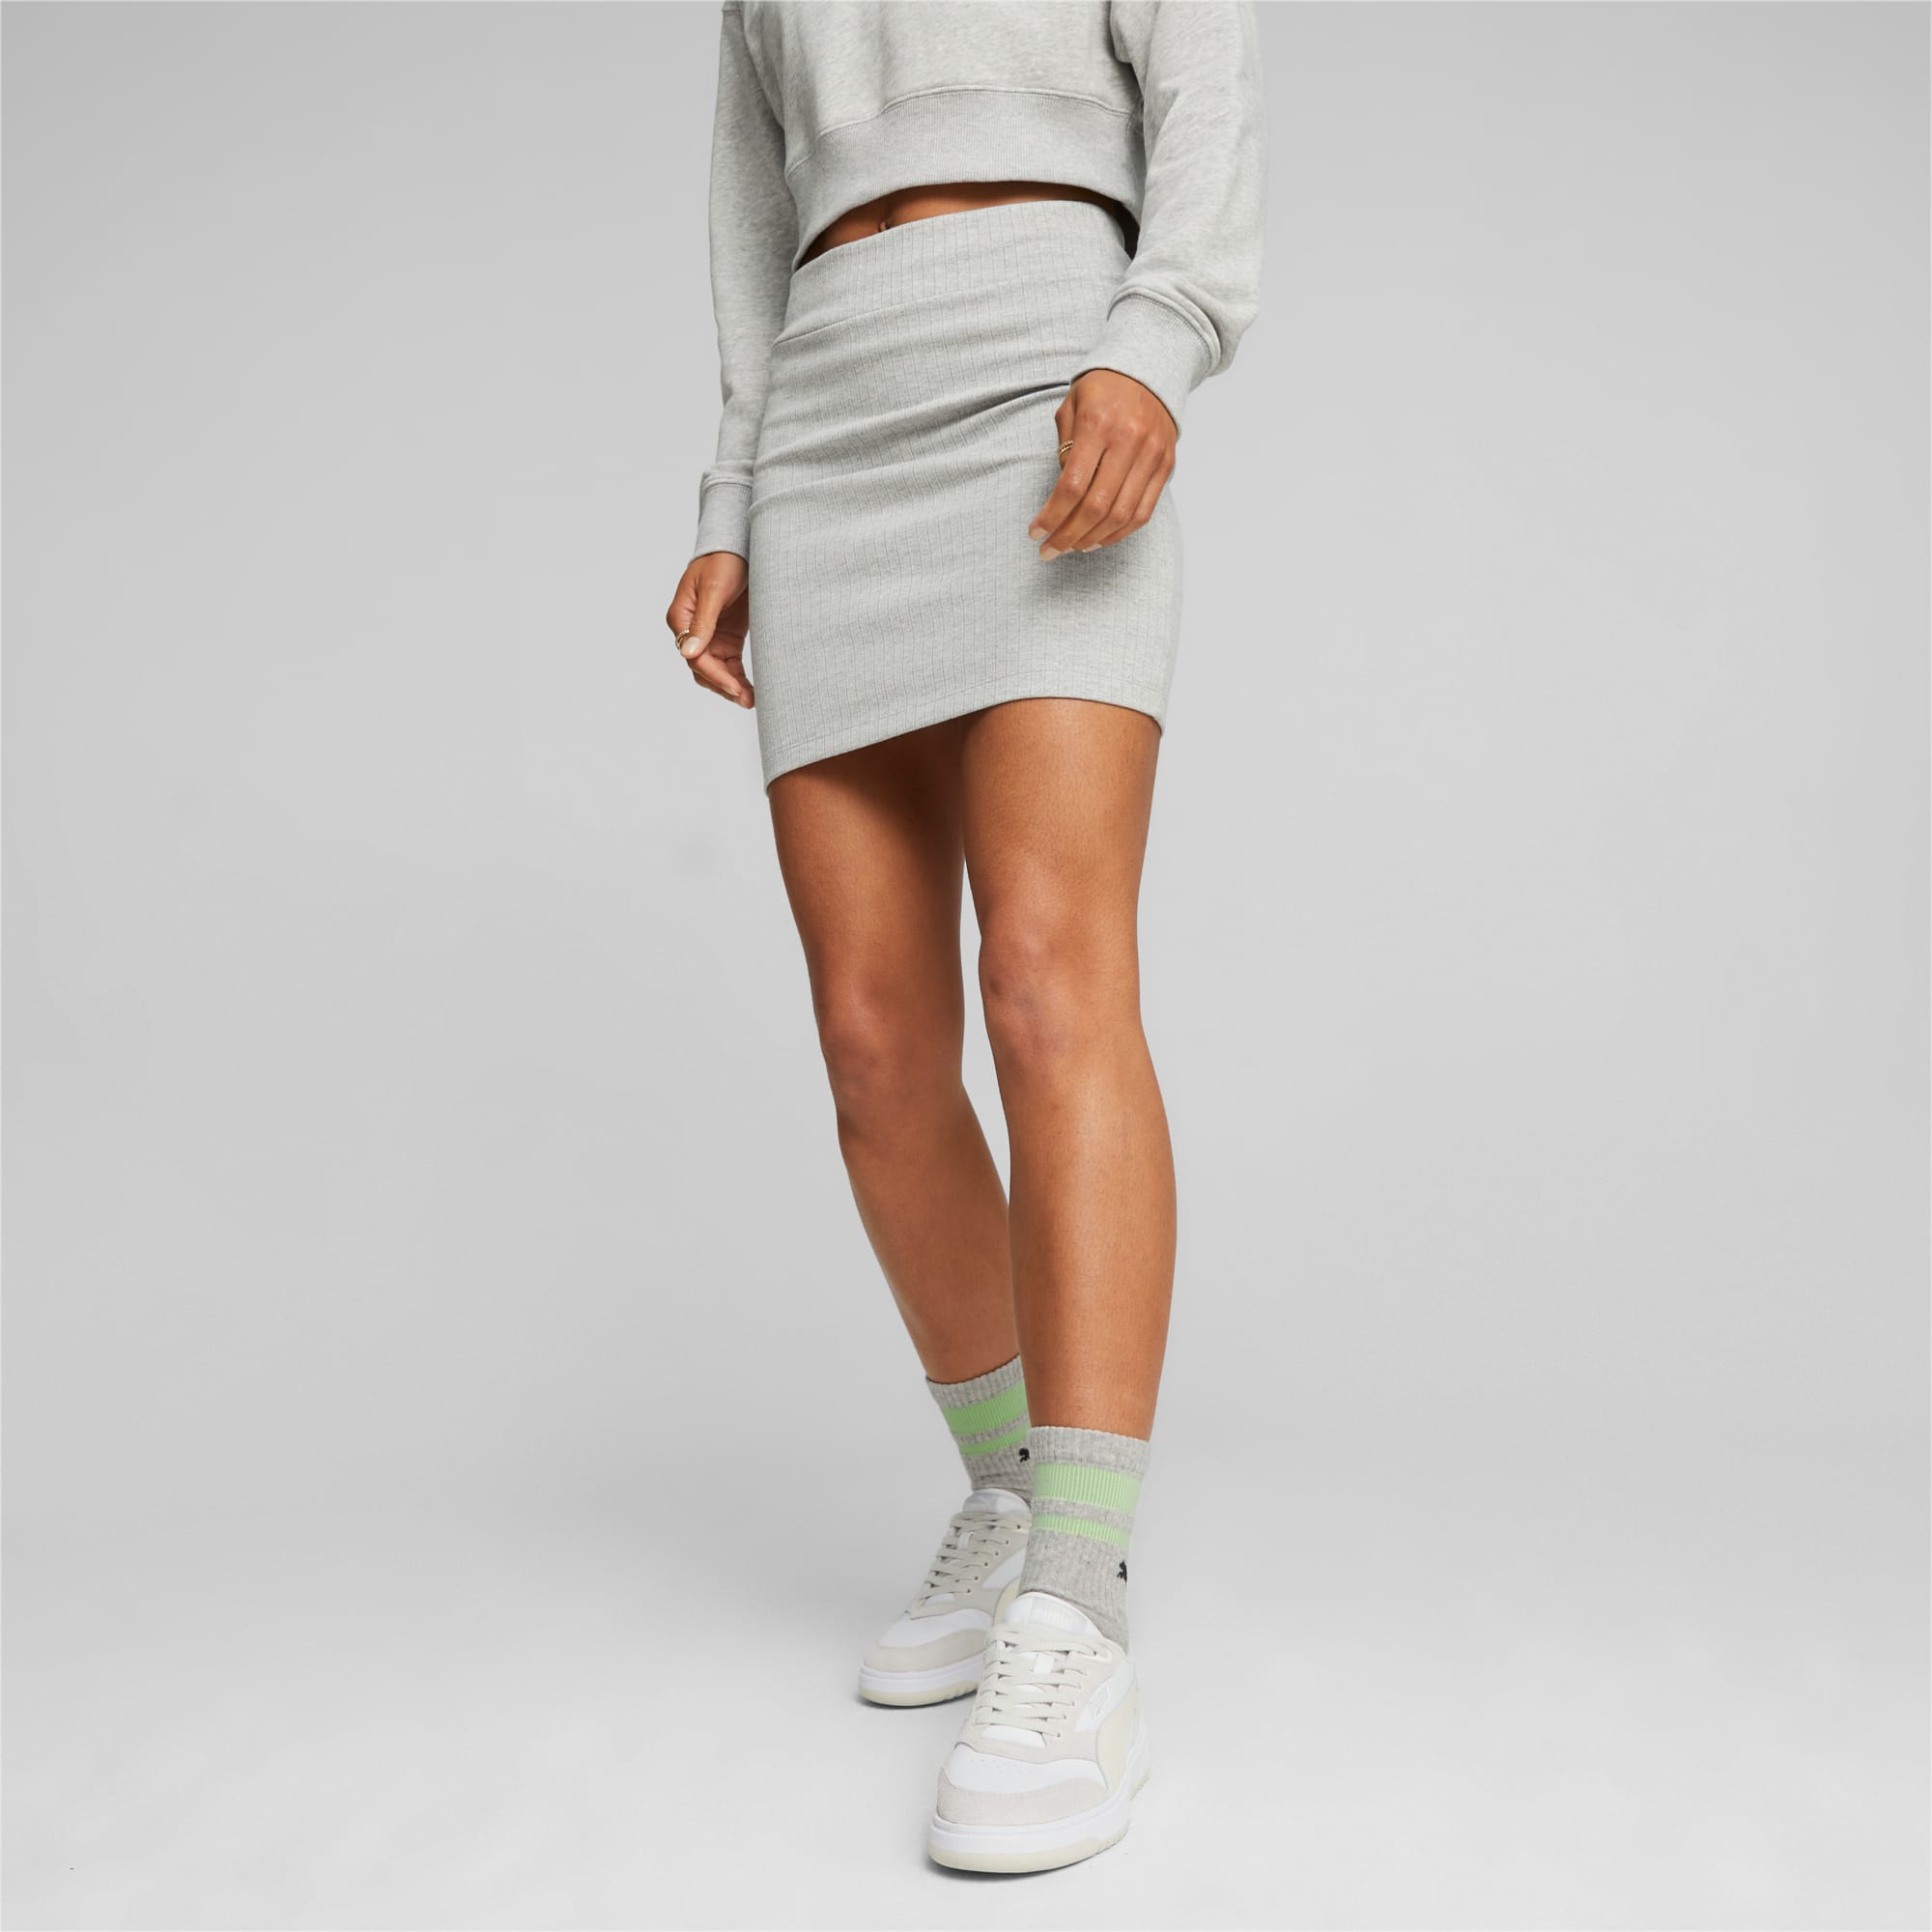 PUMA Classics Women's Ribbed Skirt, Light Grey Heather, Size 3XL, Clothing